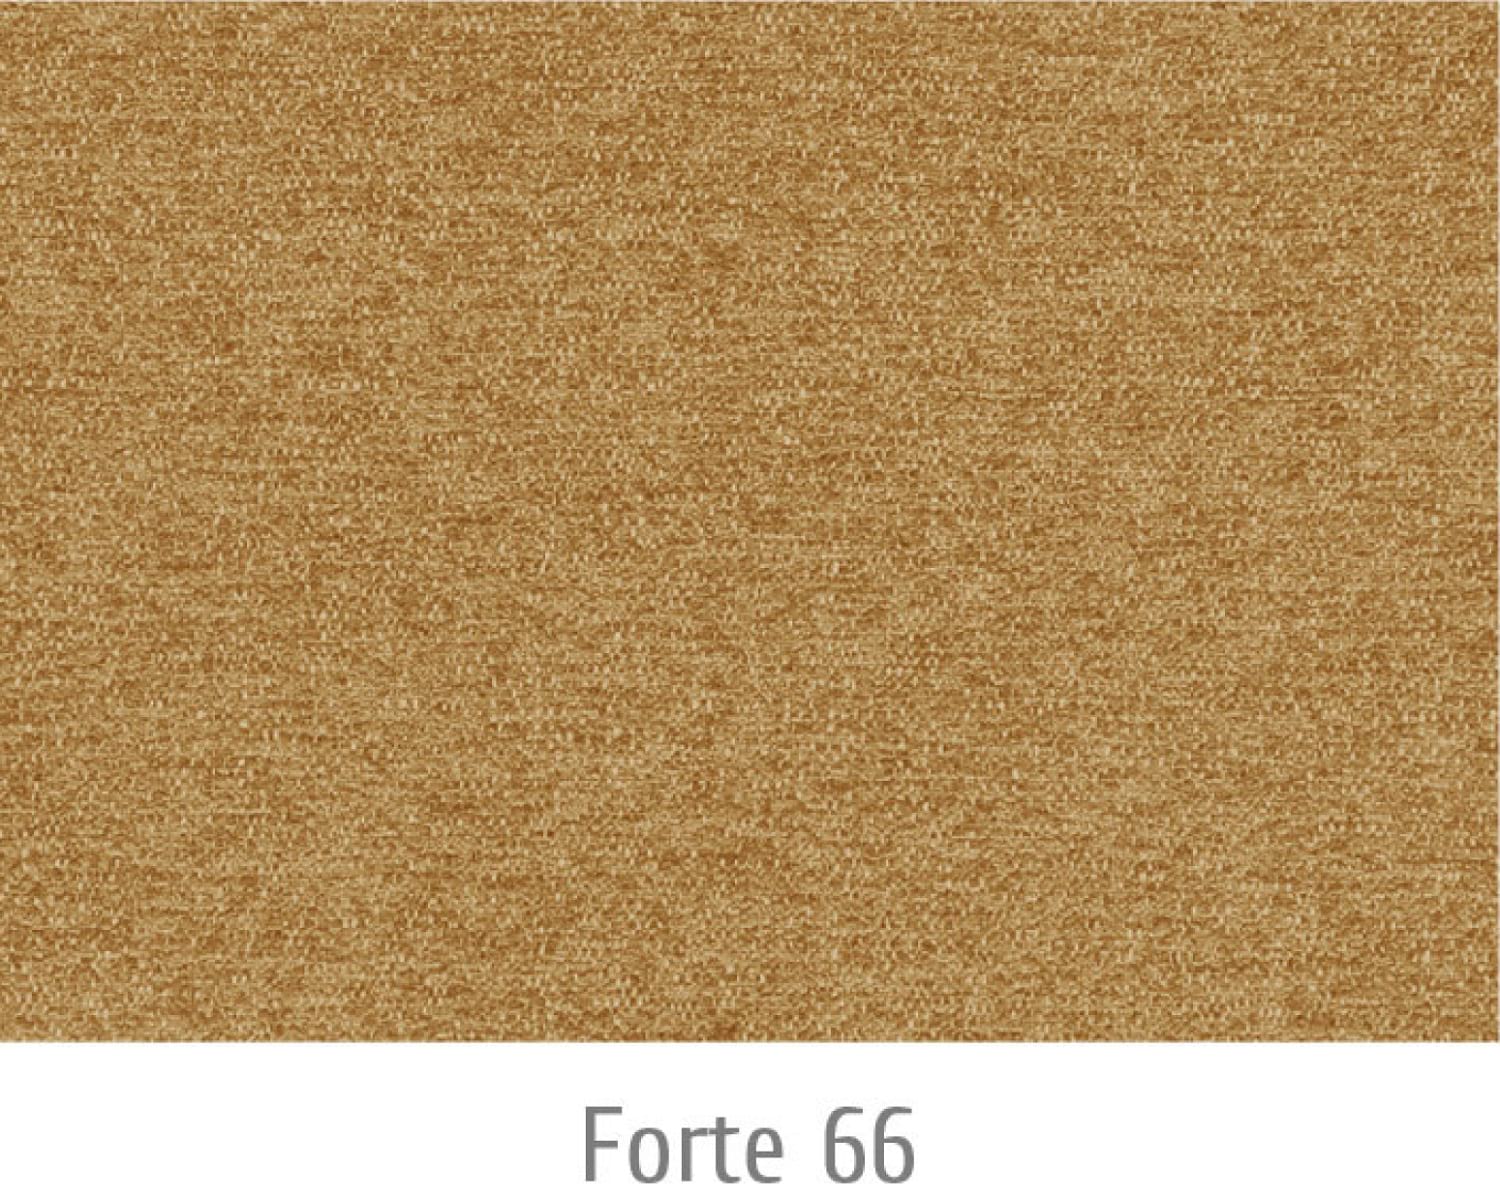 Forte66